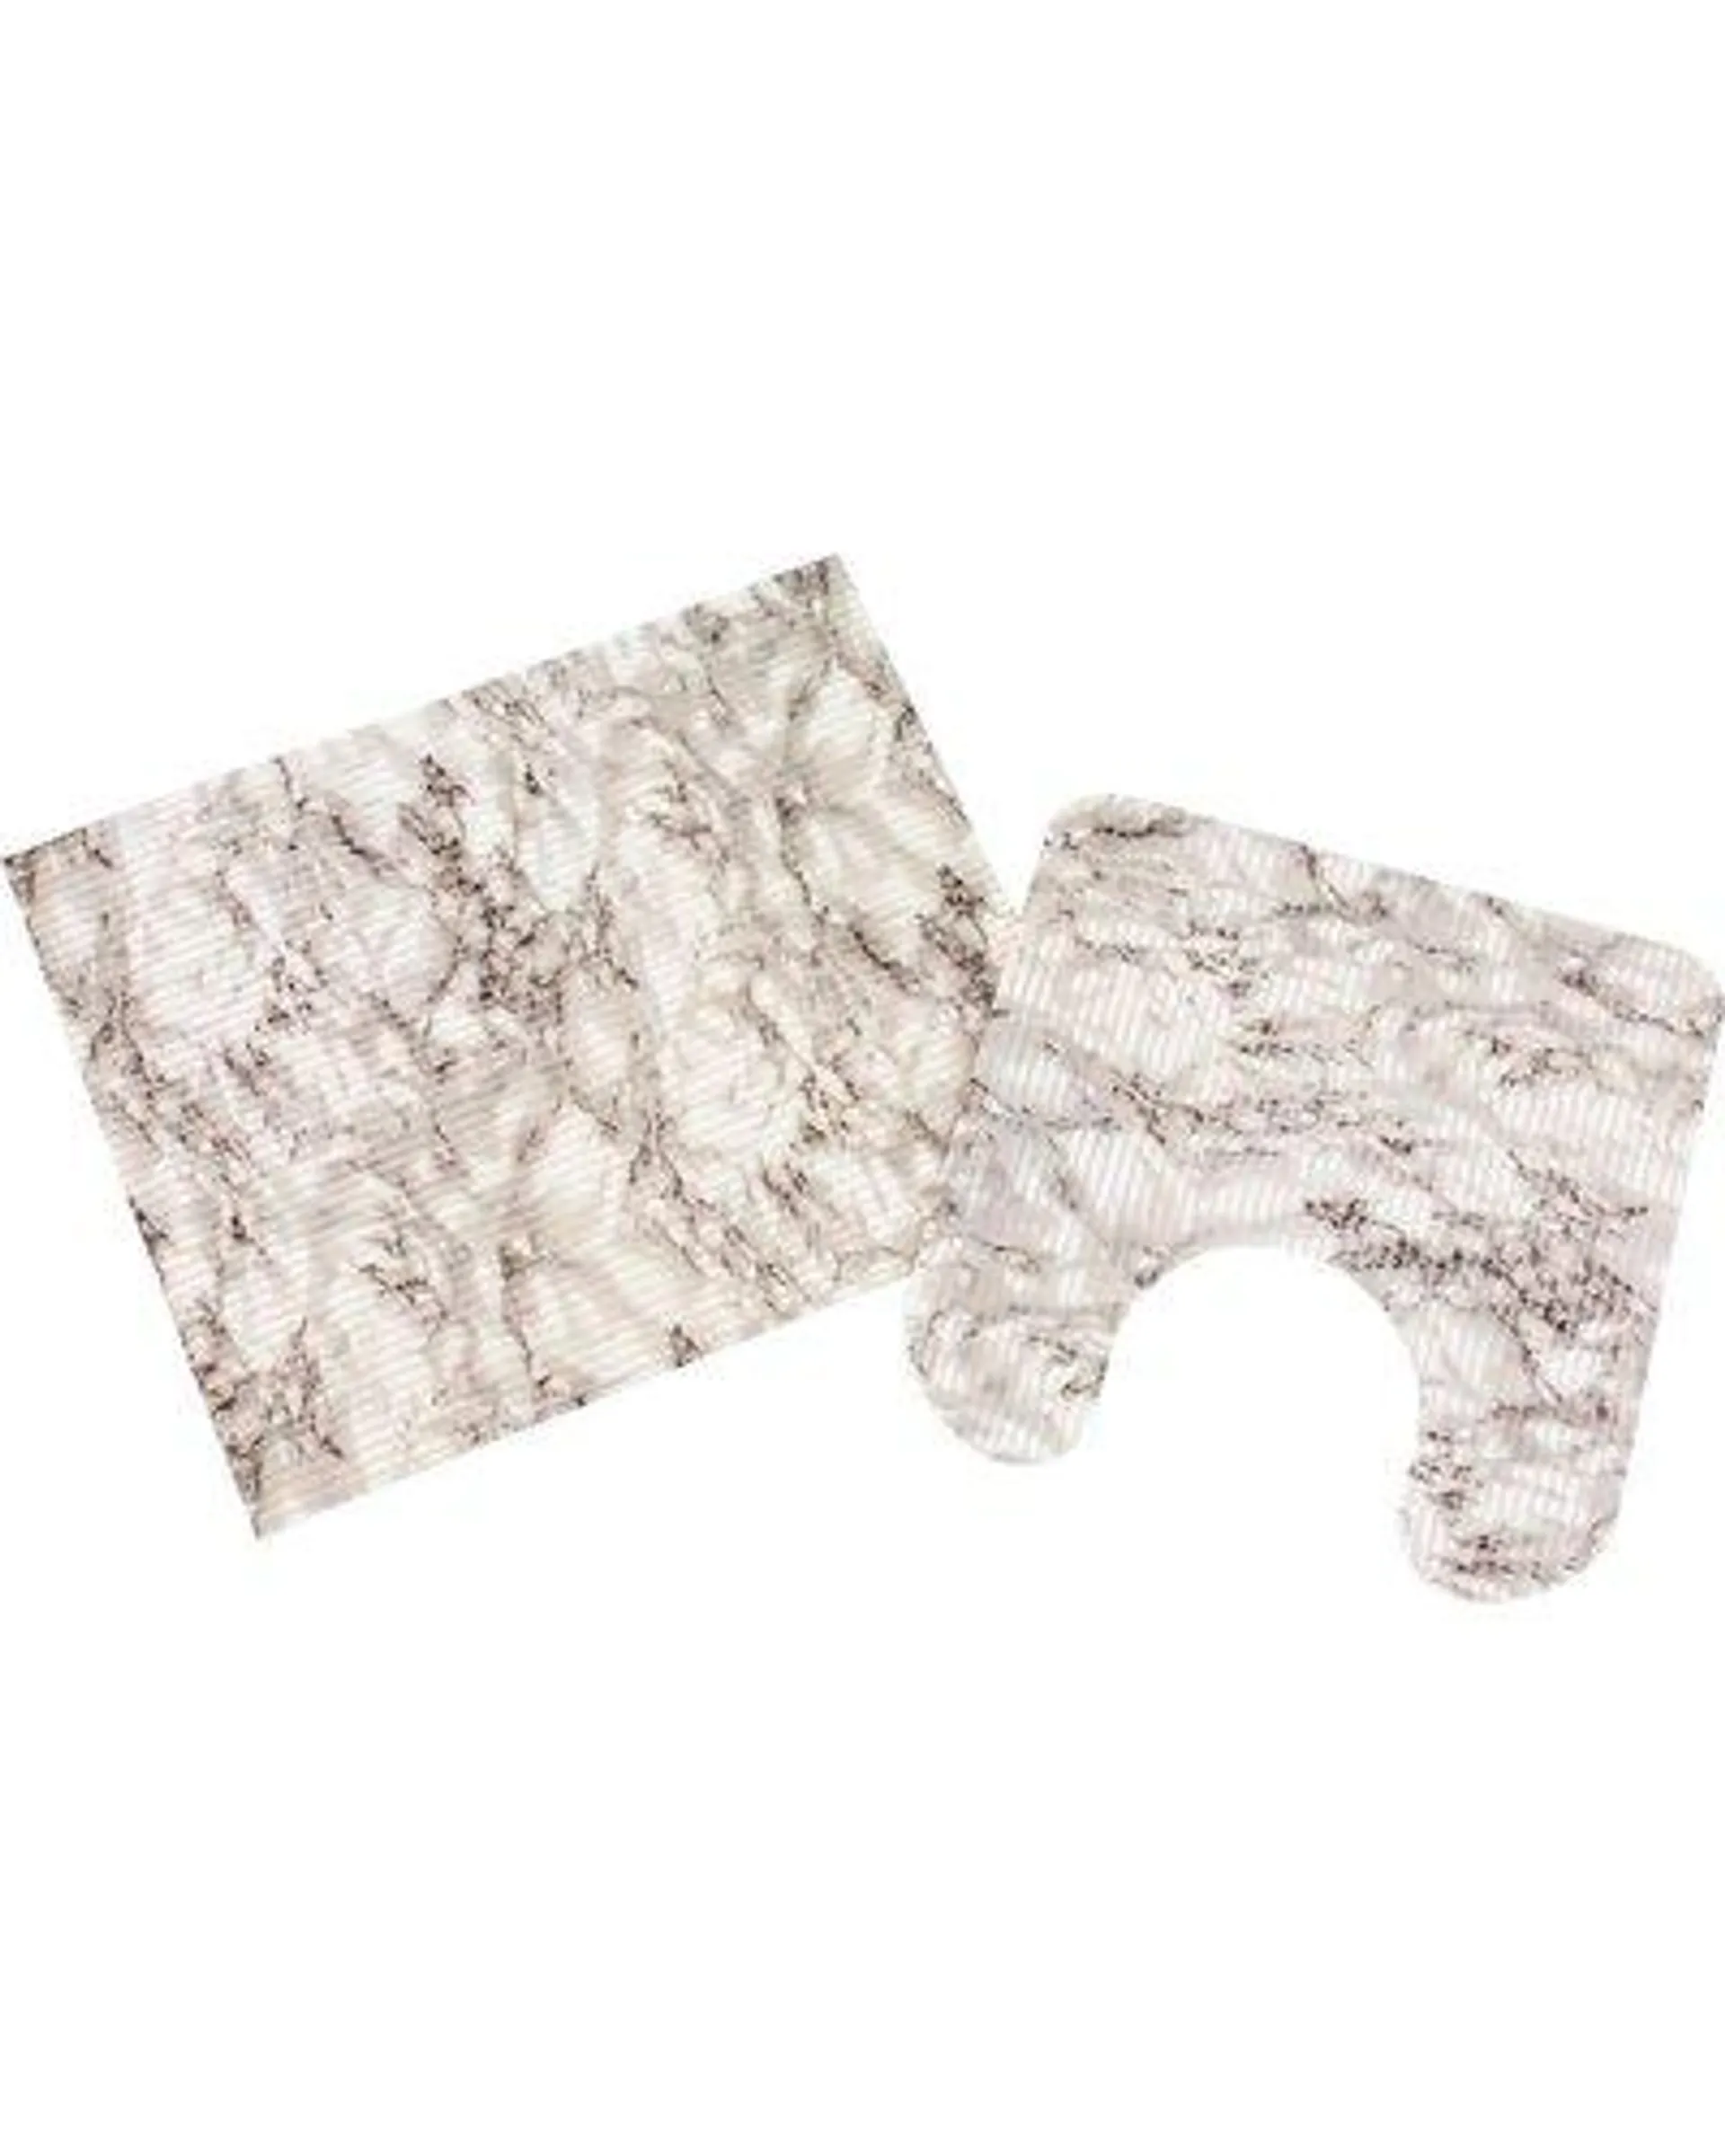 Seagull PVC Foam Floor Bathroom Set (65cmx50cm)(Assorted Designs)